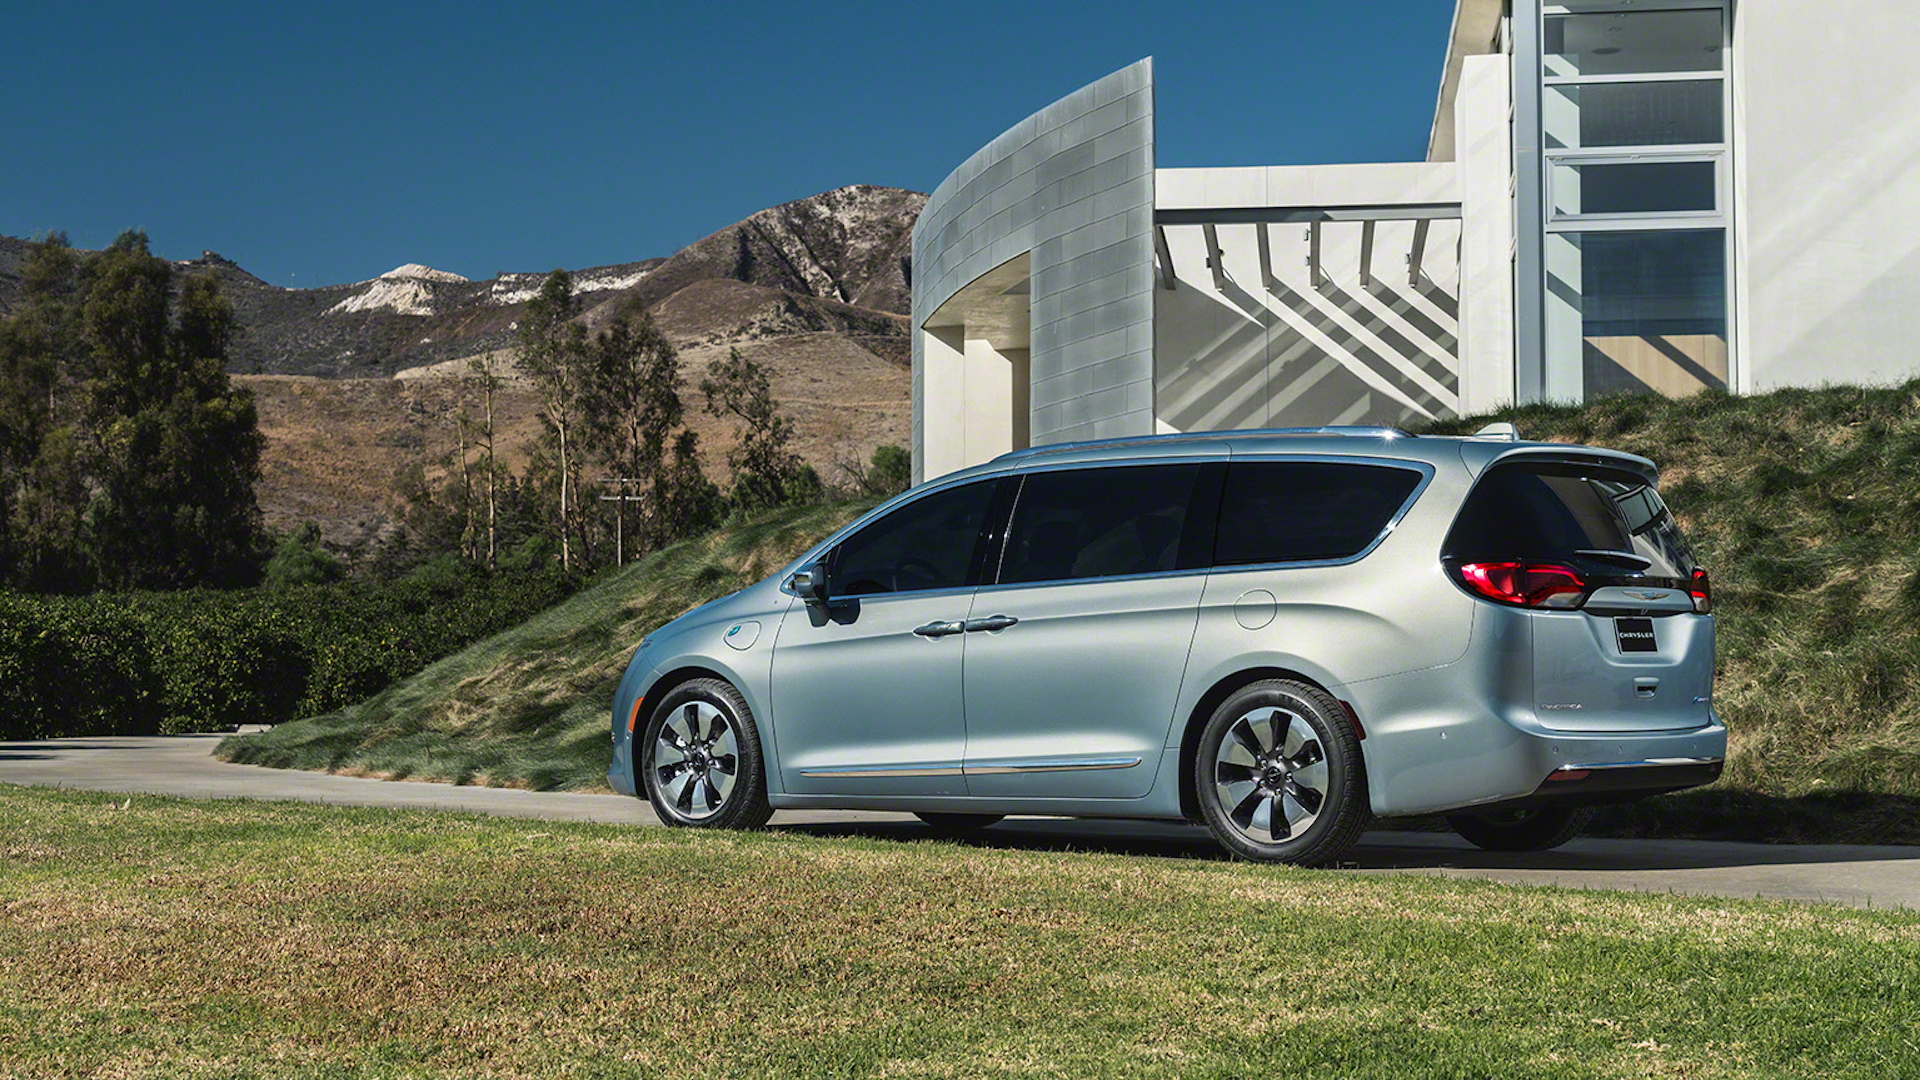 2017 Chrysler Pacifica Hybrid PlugIn Minivan Offers 30 Miles Of